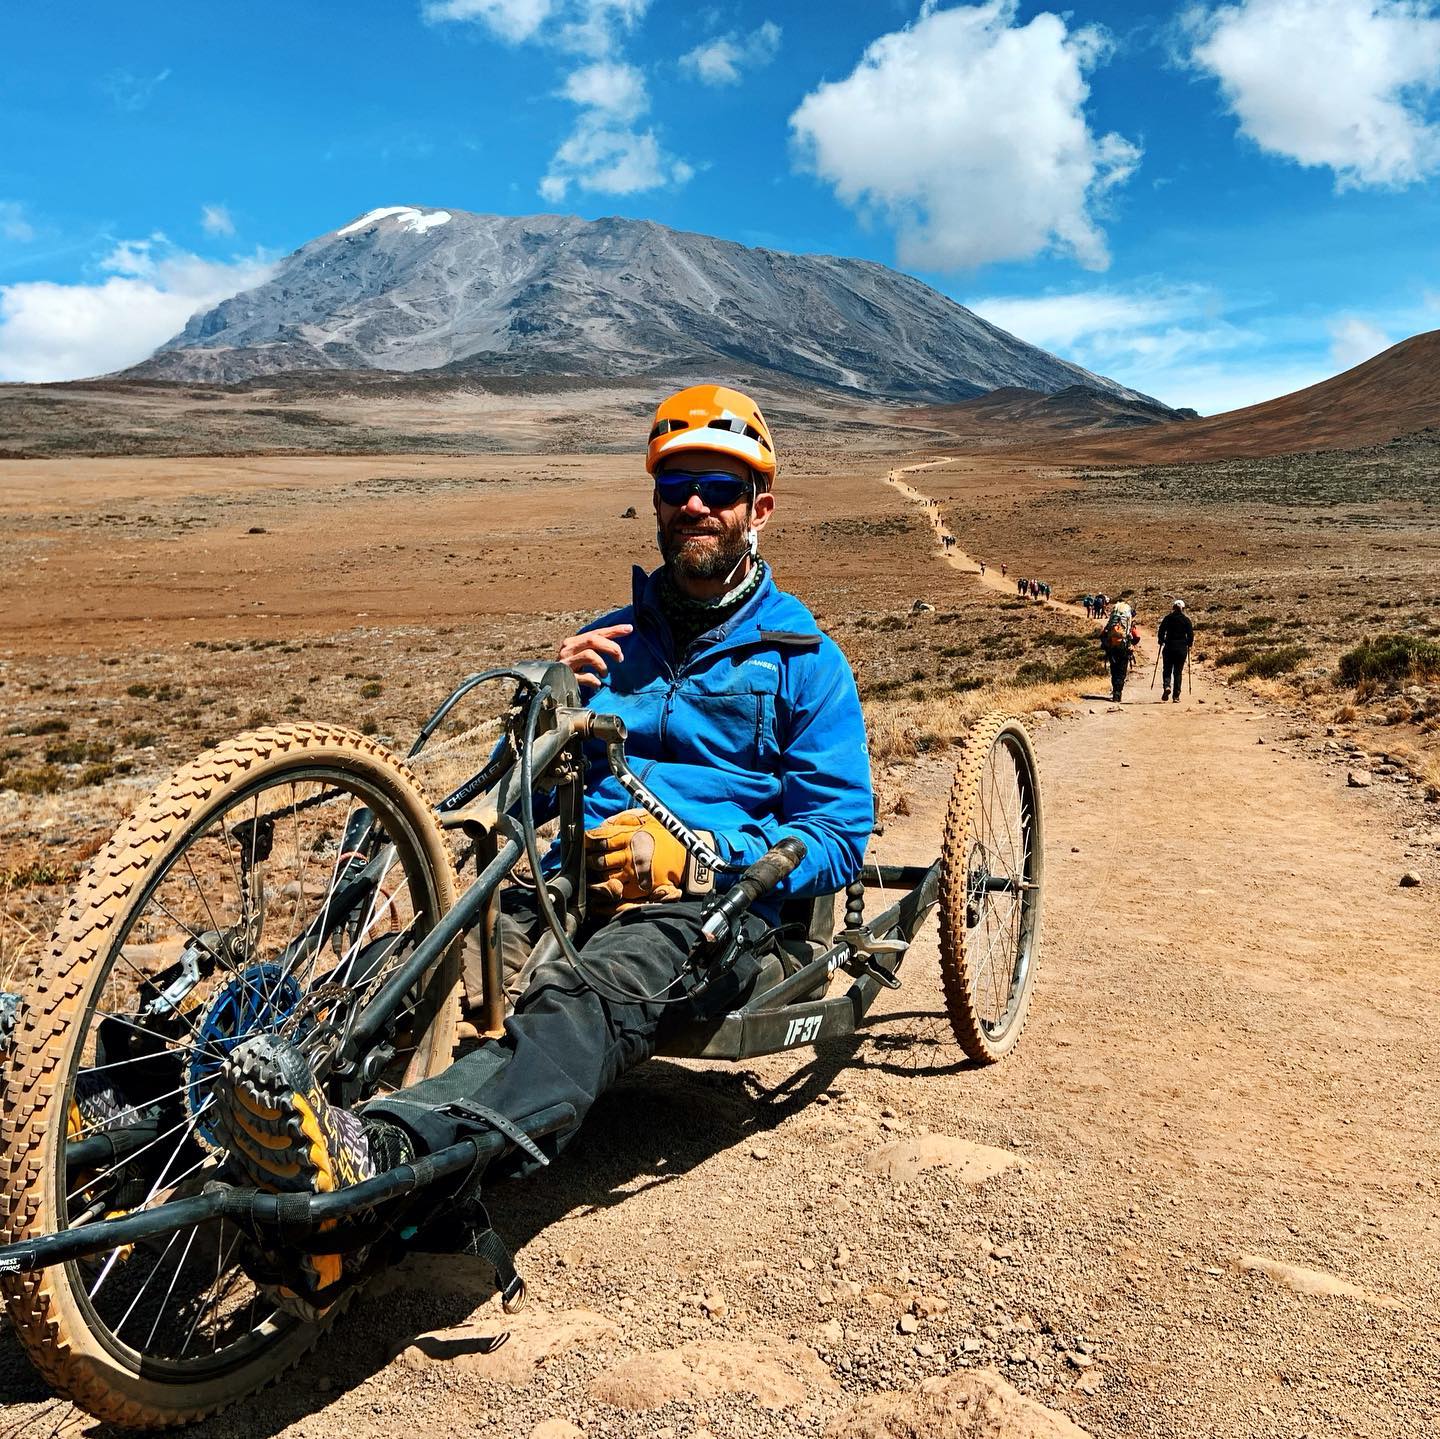 Paraplegic Carrasco and his hand cycle